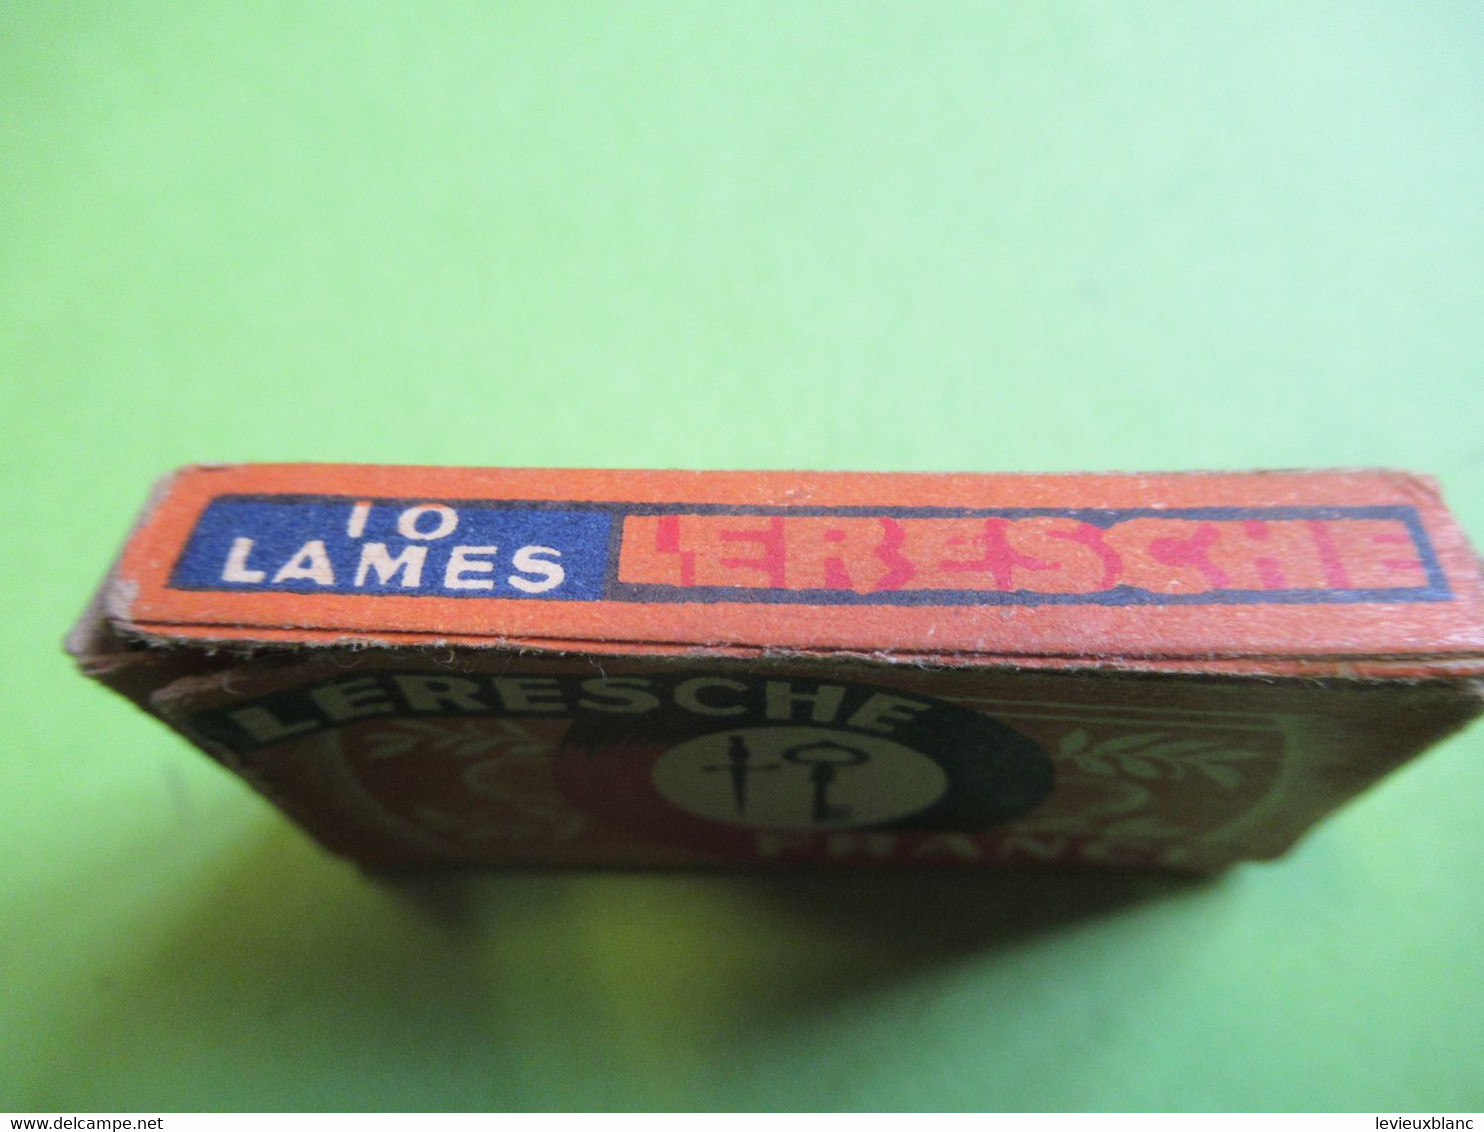 Etui Carton Pour 10 Lames De Rasoir/avec 2 Lames /LERESCHE France/ Made In France//Vers 1930-1950   PARF219 - Scheermesjes